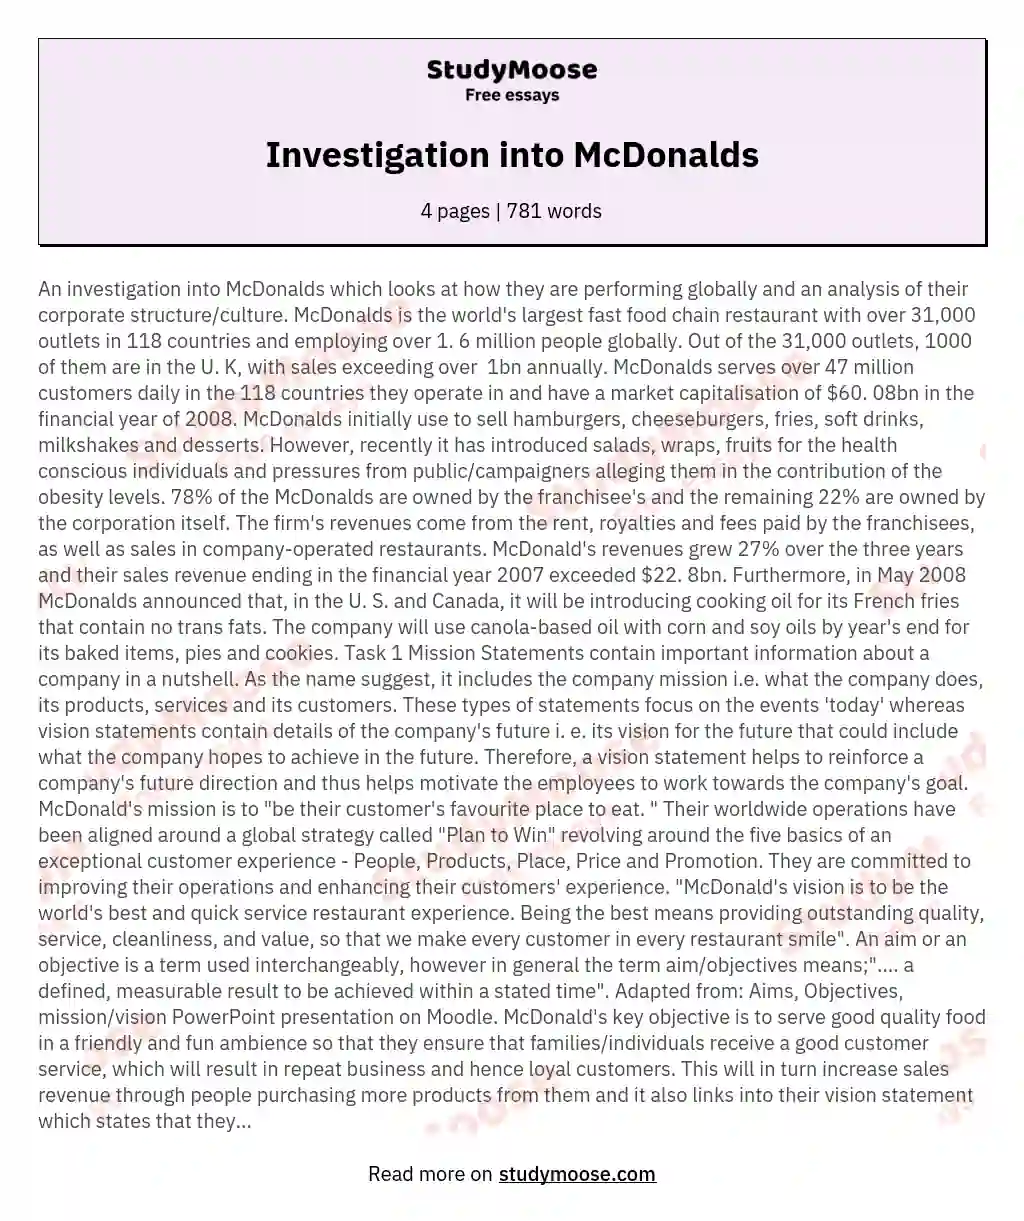 Investigation into McDonalds essay